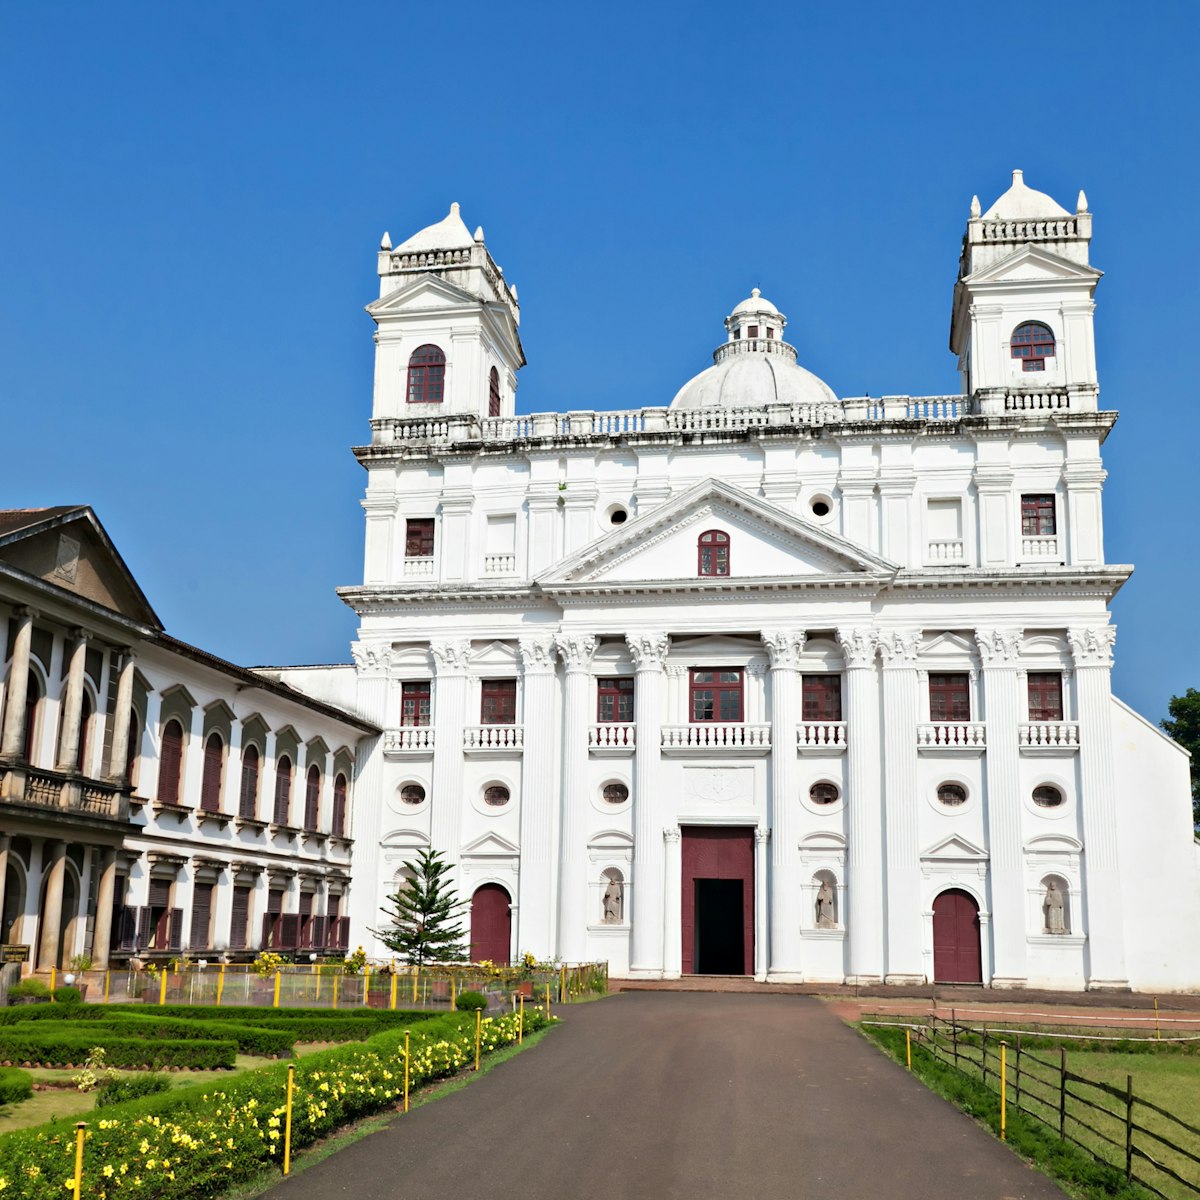 Church of Saint Cajetan in Old Goa, India; 
Church & Convent of St Cajetan

Shutterstock ID 115804678; your: Bridget Brown; gl: 65050; netsuite: Online Editorial; full: POI Image Update